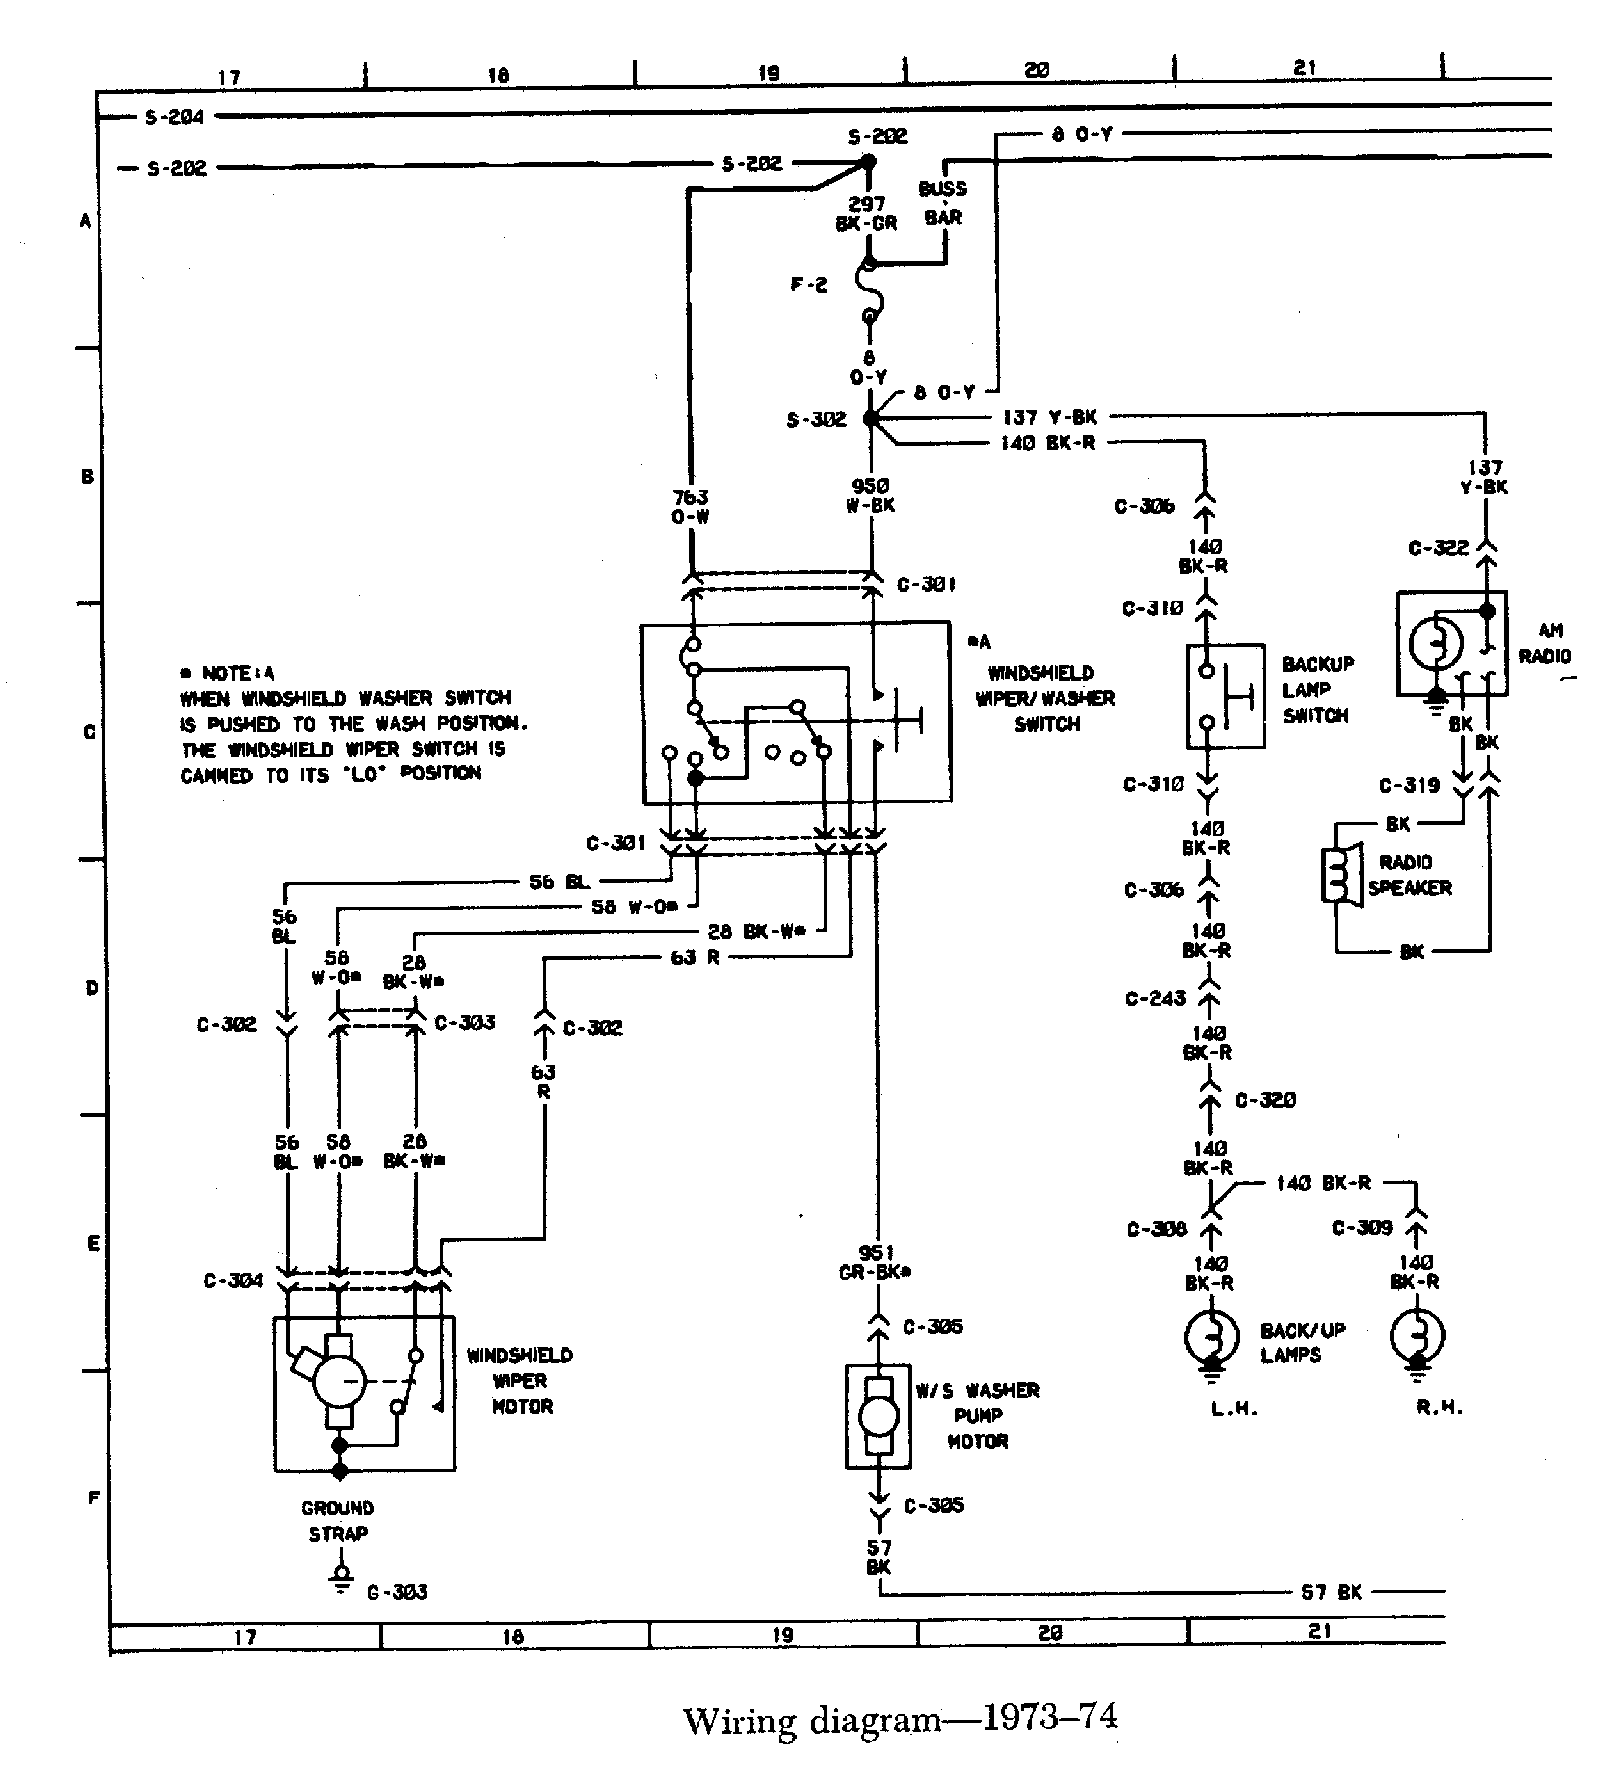 A Ford 302 Wiring Diagram